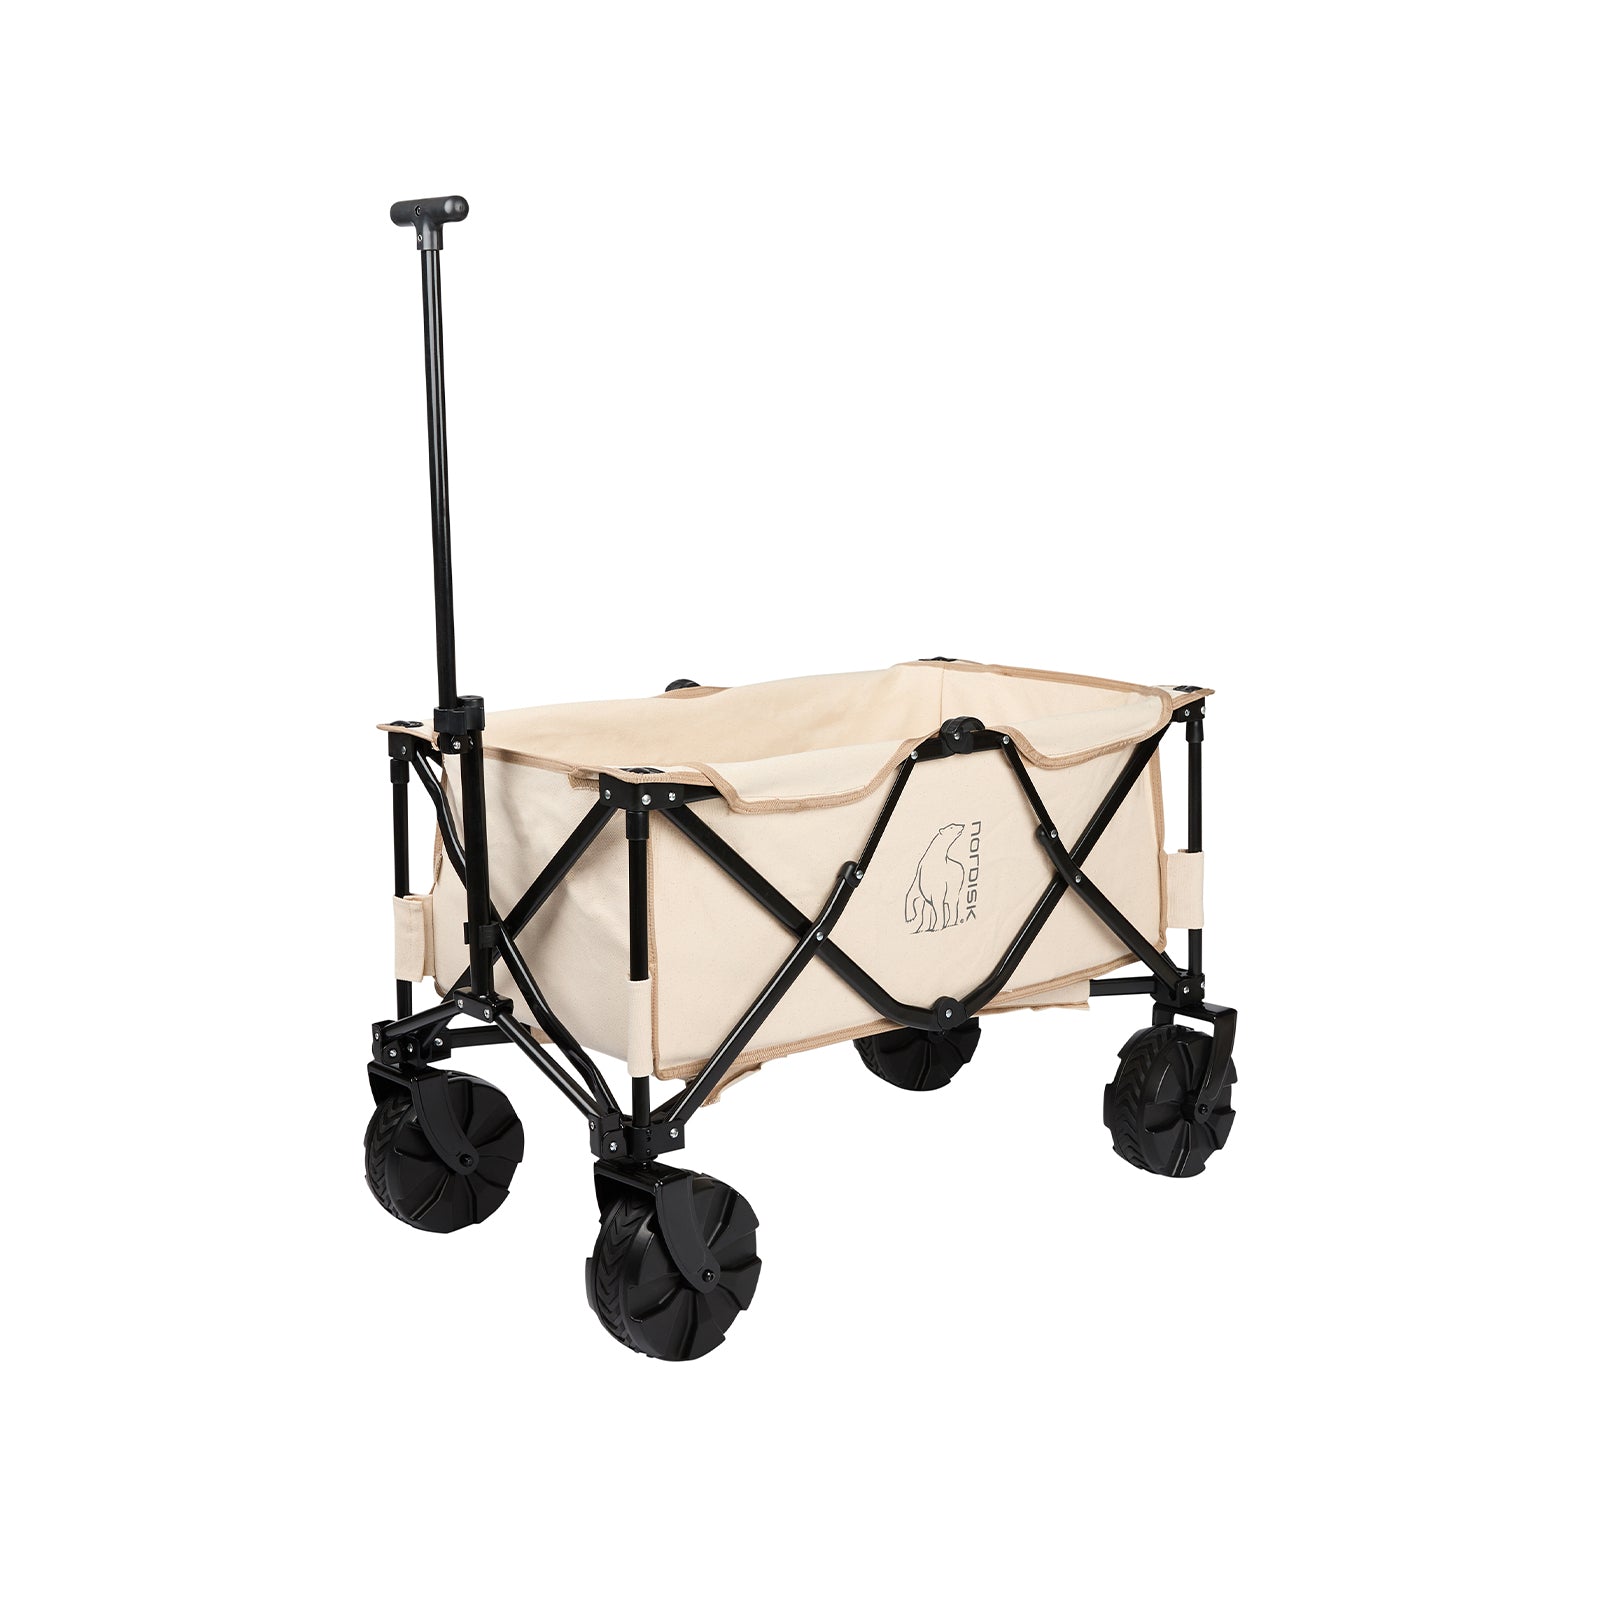 Nordisk - Chariot Cotton Canvas Wagon